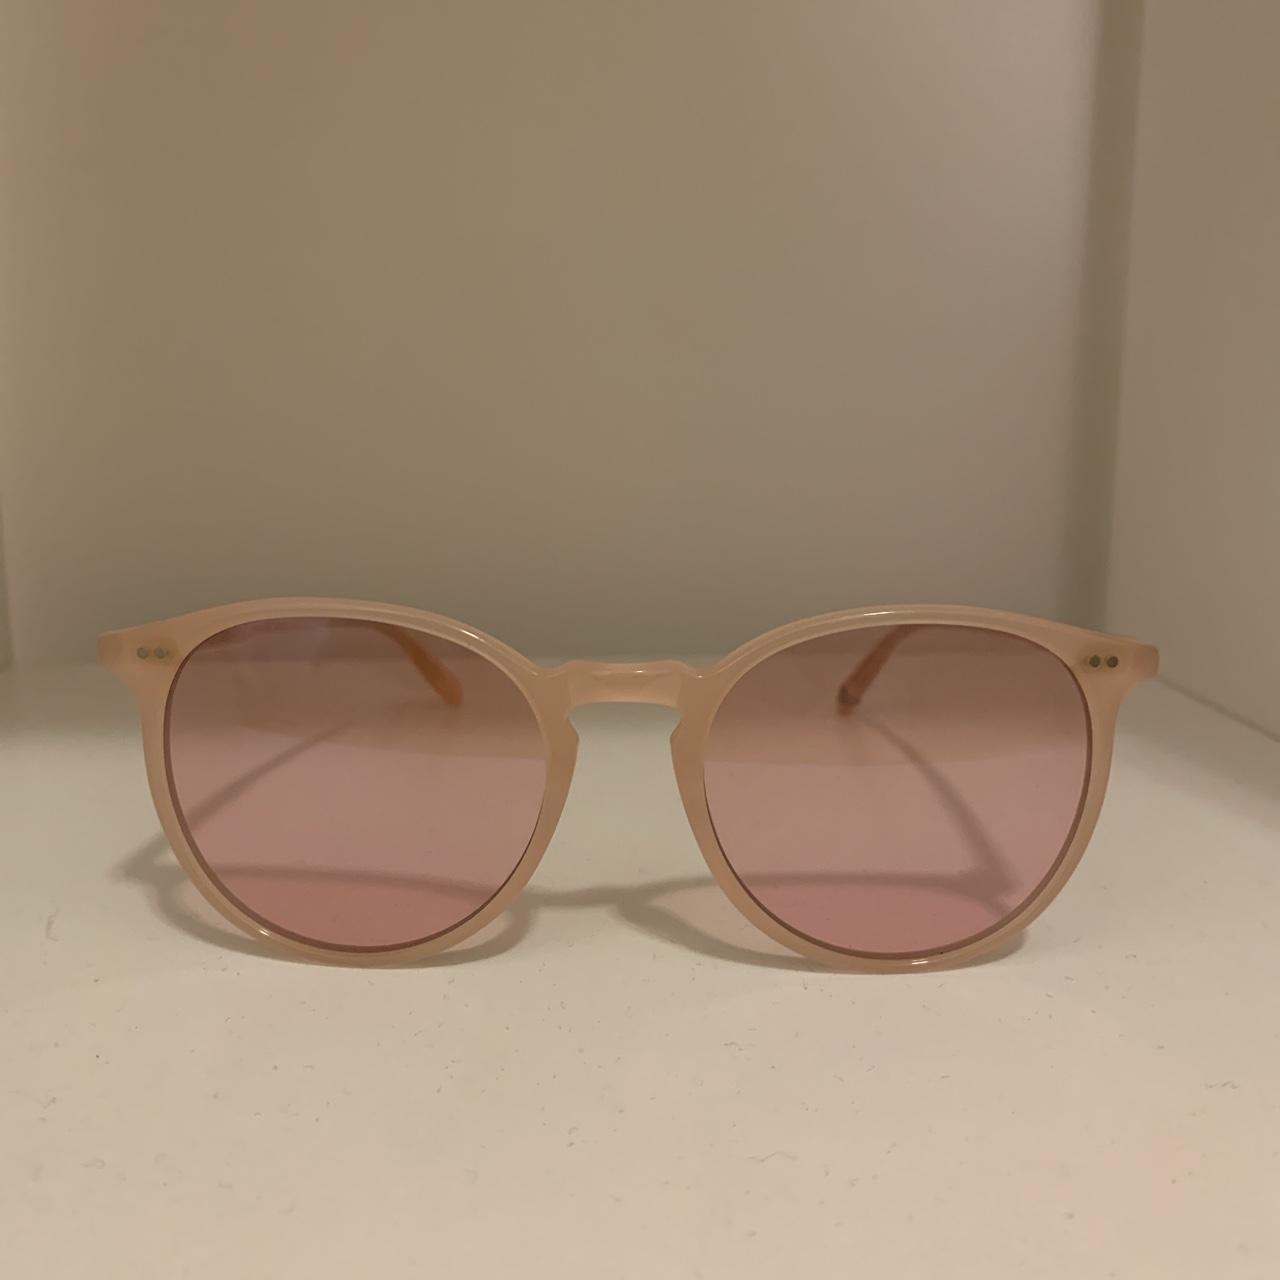 Product Image 2 - #Pink #GarrettLeight #MorningsideSun #Sunglasses

Brand new.